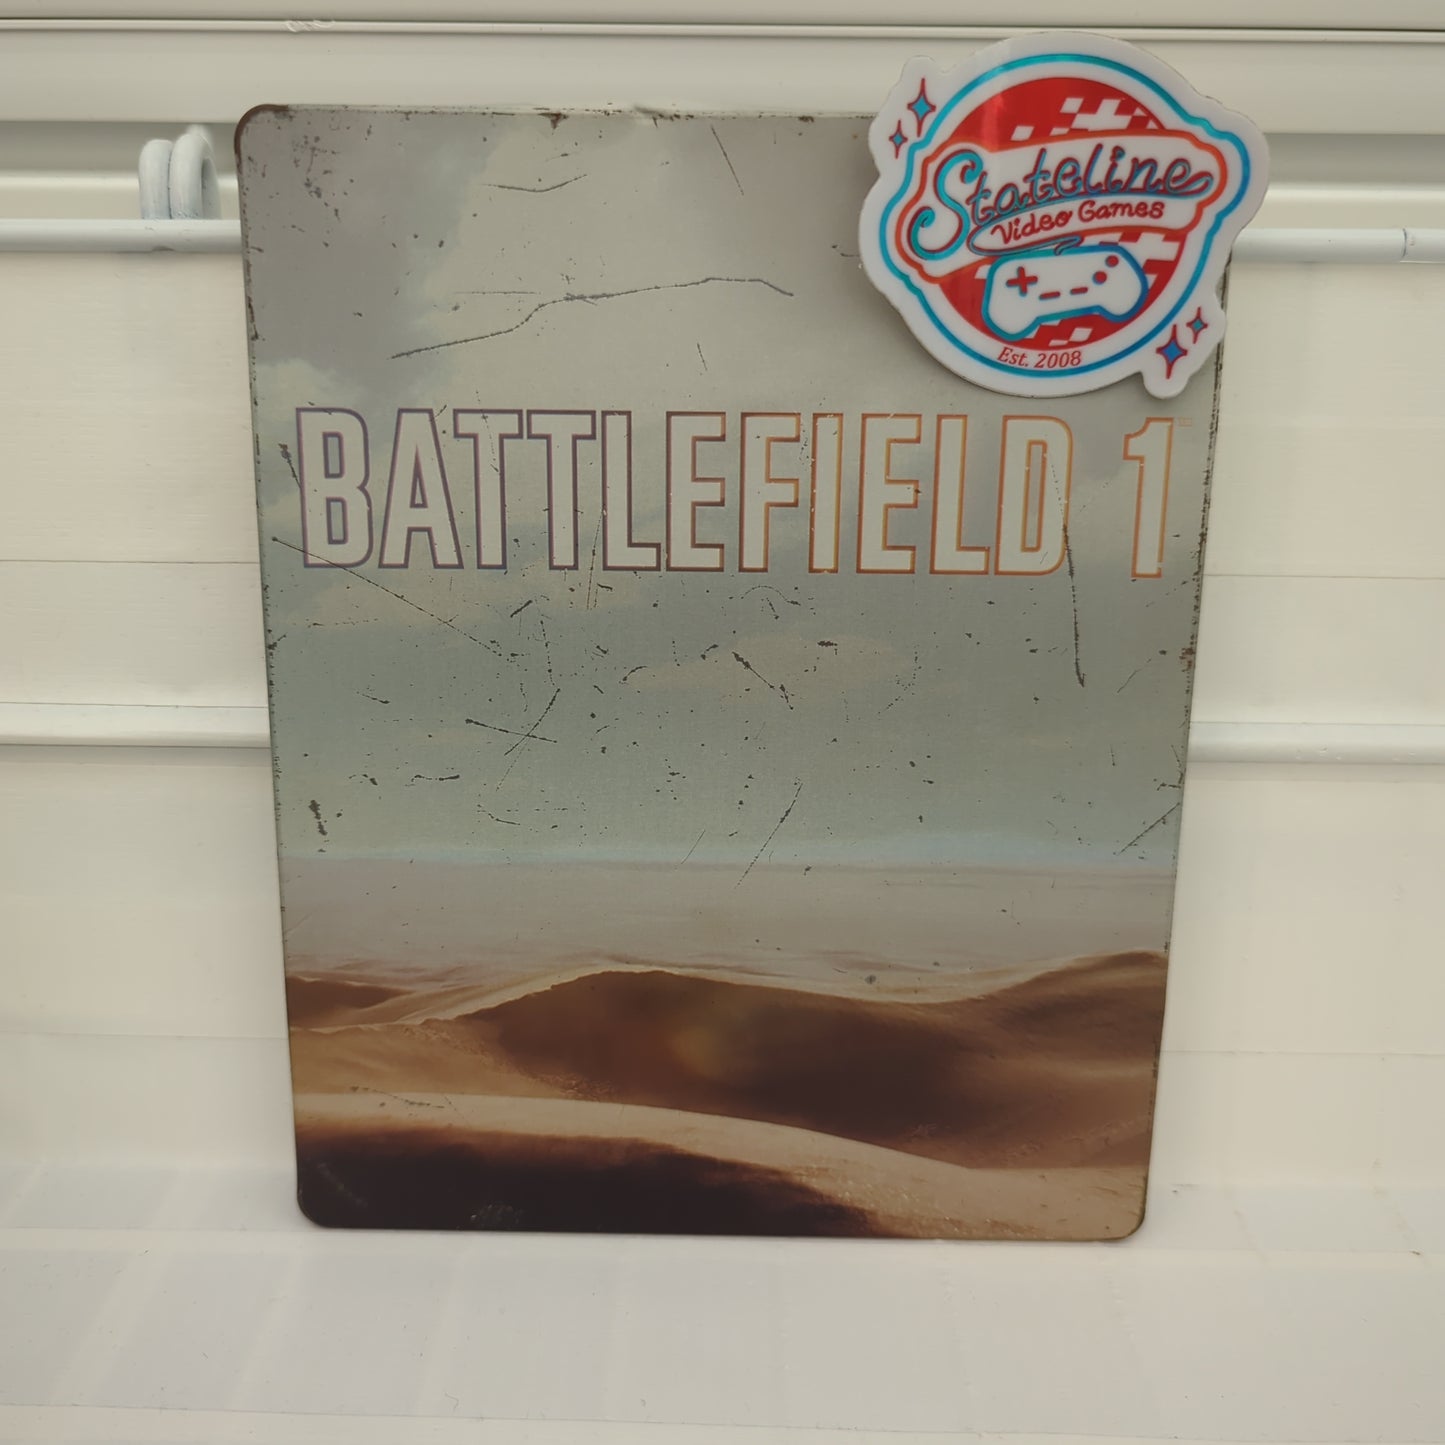 Battlefield 1 - Playstation 4